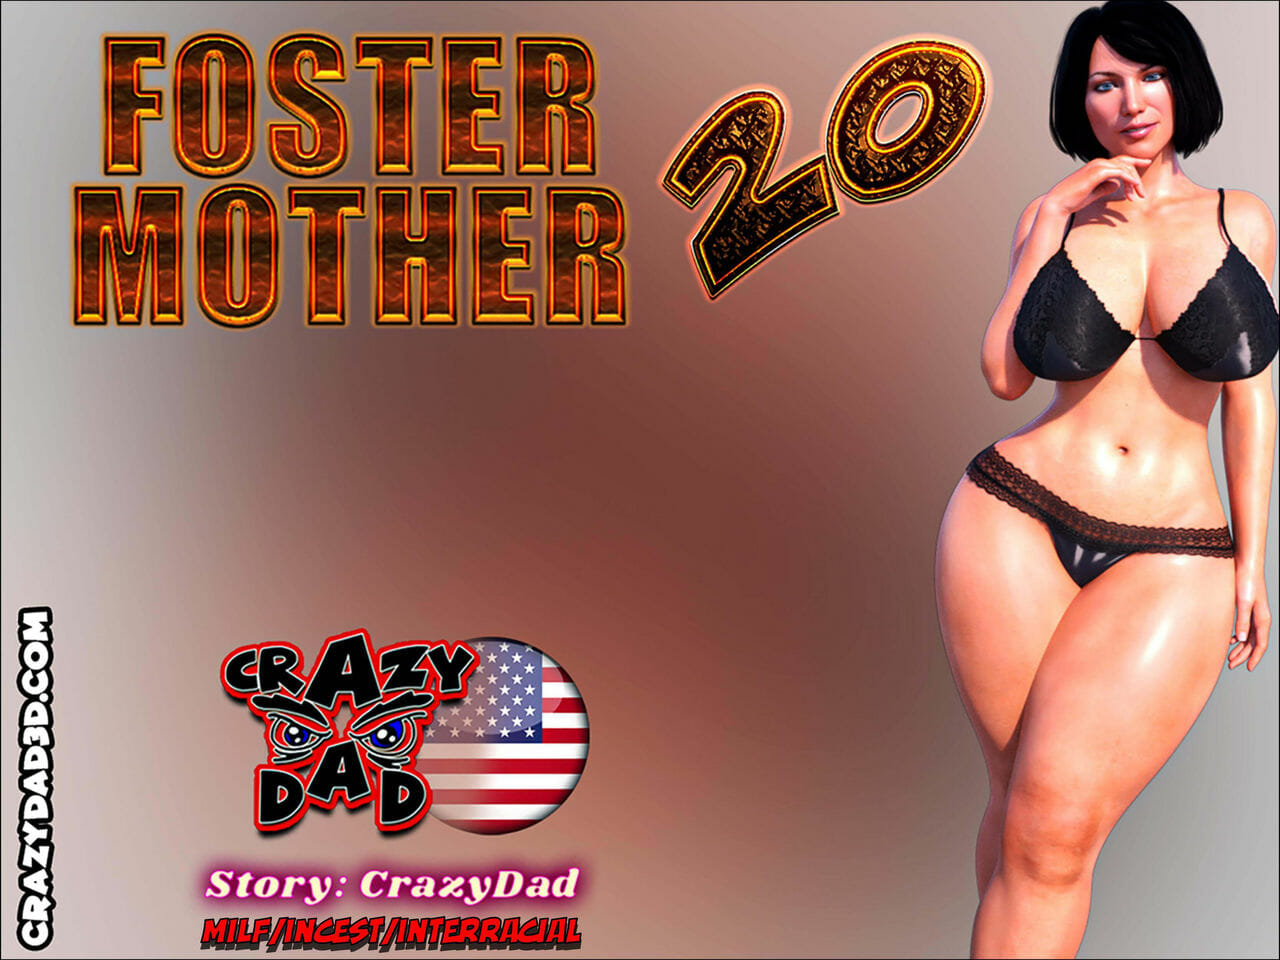 Foster Mother Porn Comics By Crazy Dad Porn Comic Rule Comics